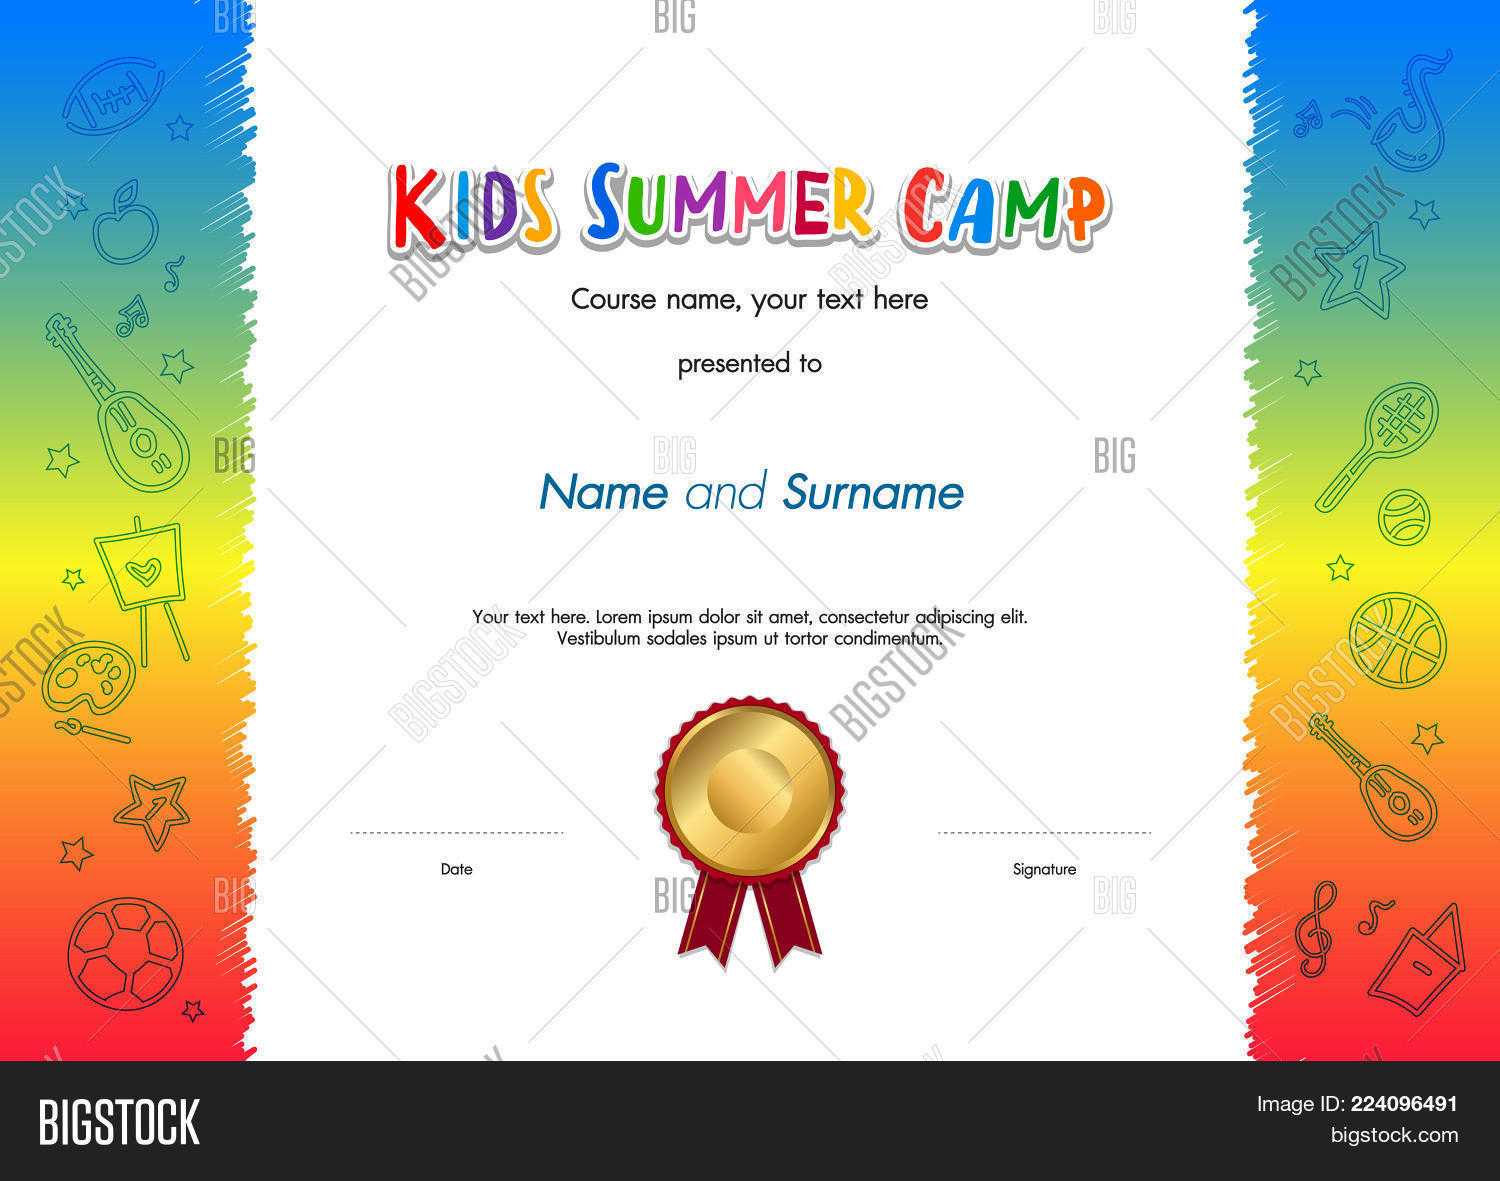 Kids Summer Camp Vector & Photo (Free Trial) | Bigstock In Fun Certificate Templates